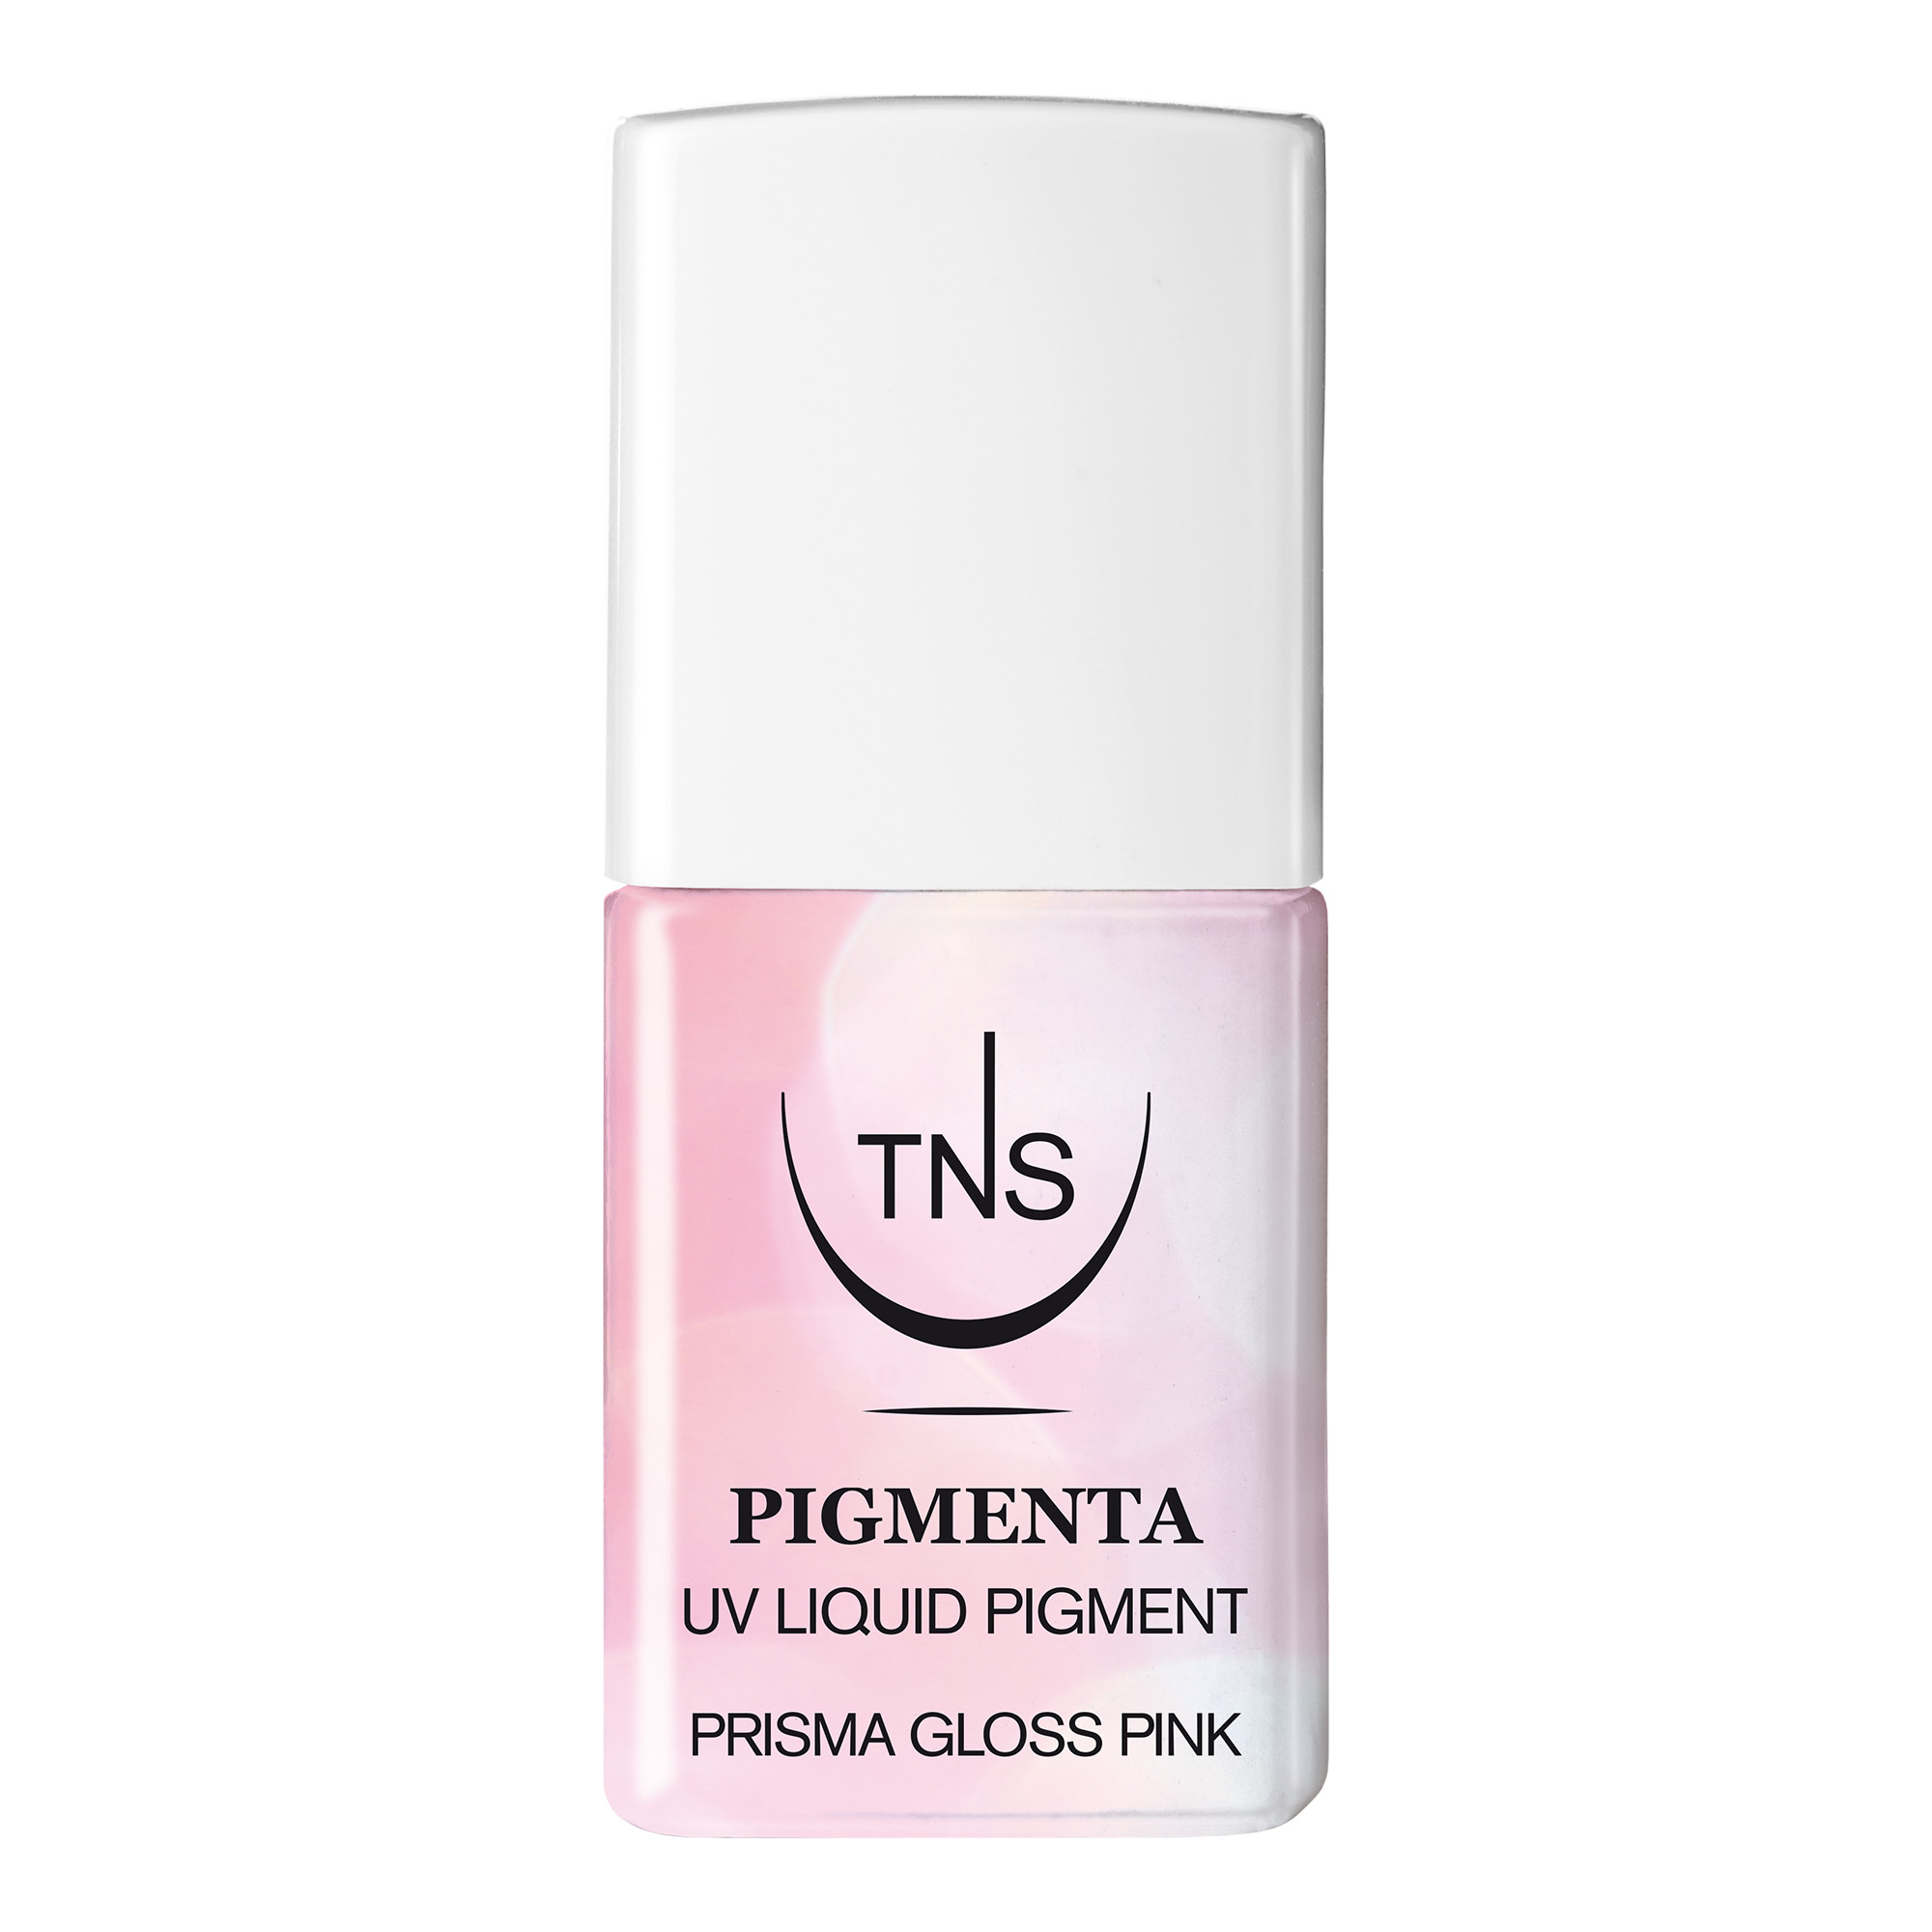 Pigmento Liquido UV Prisma Gloss Pink rosa iridescente 10 ml Pigmenta TNS